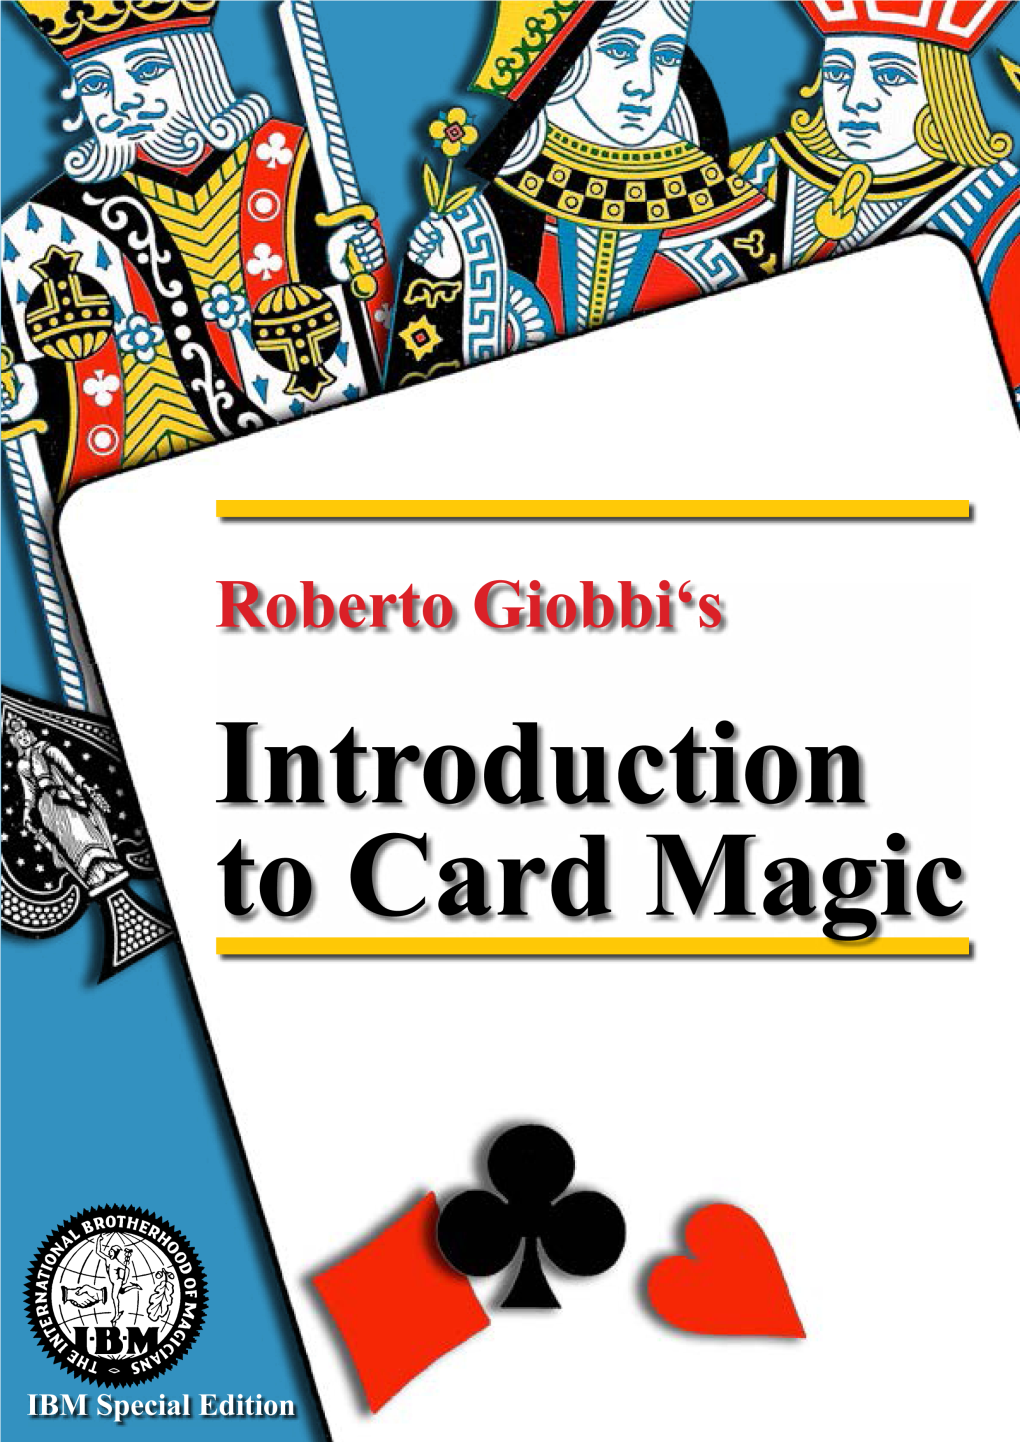 Roberto Giobbi's Introduction to Card Magic 3 ♦♣ Read Me